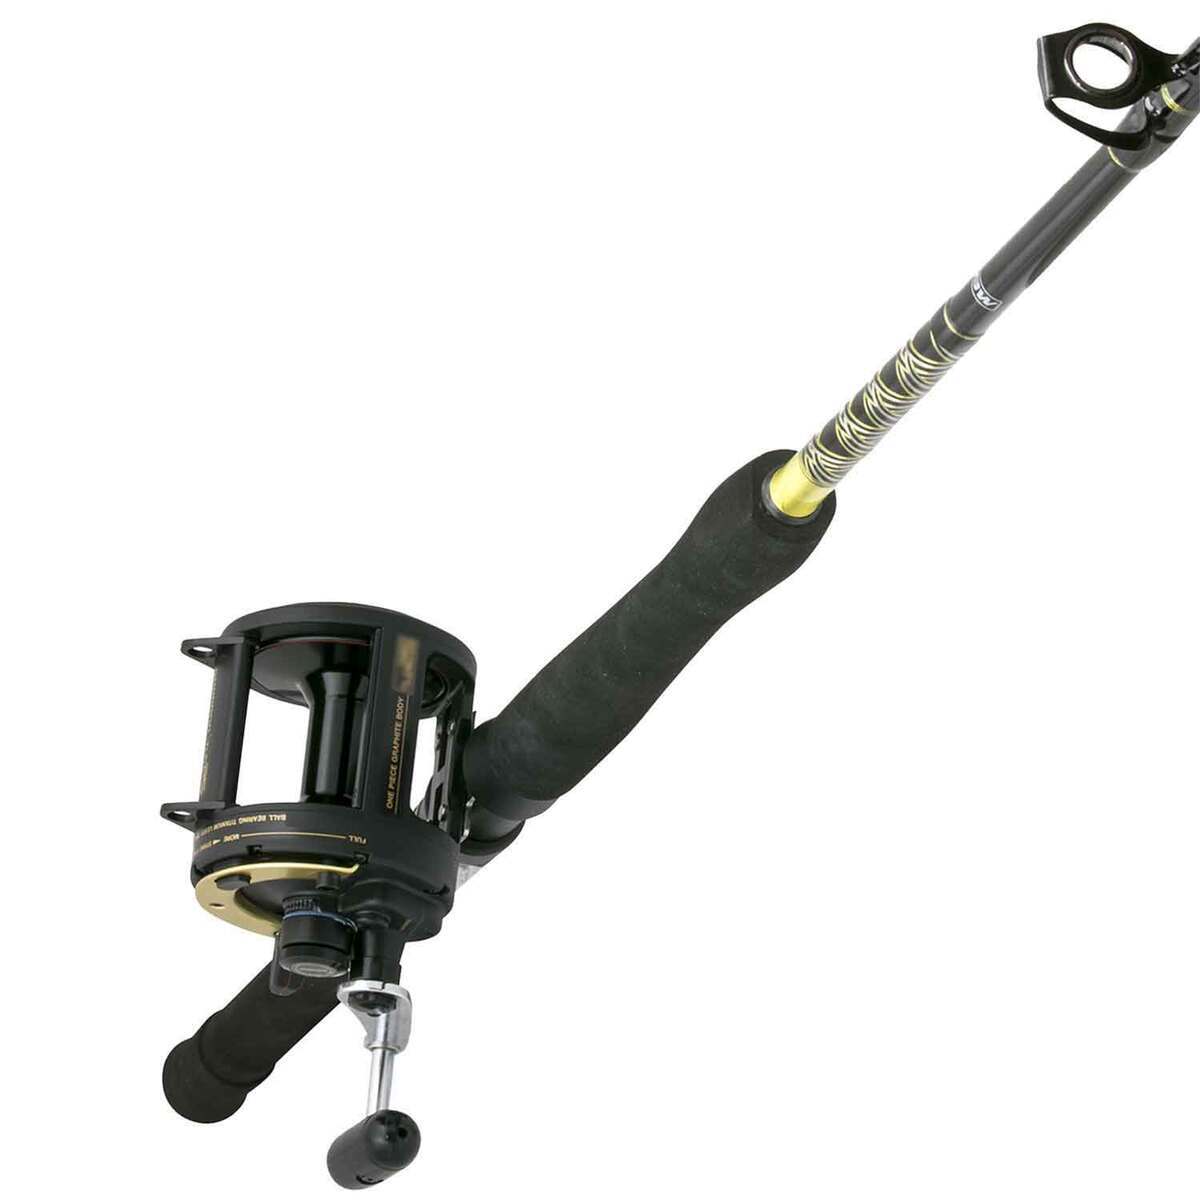  Fishing Rod & Reel Combos - Trolling / Fishing Rod